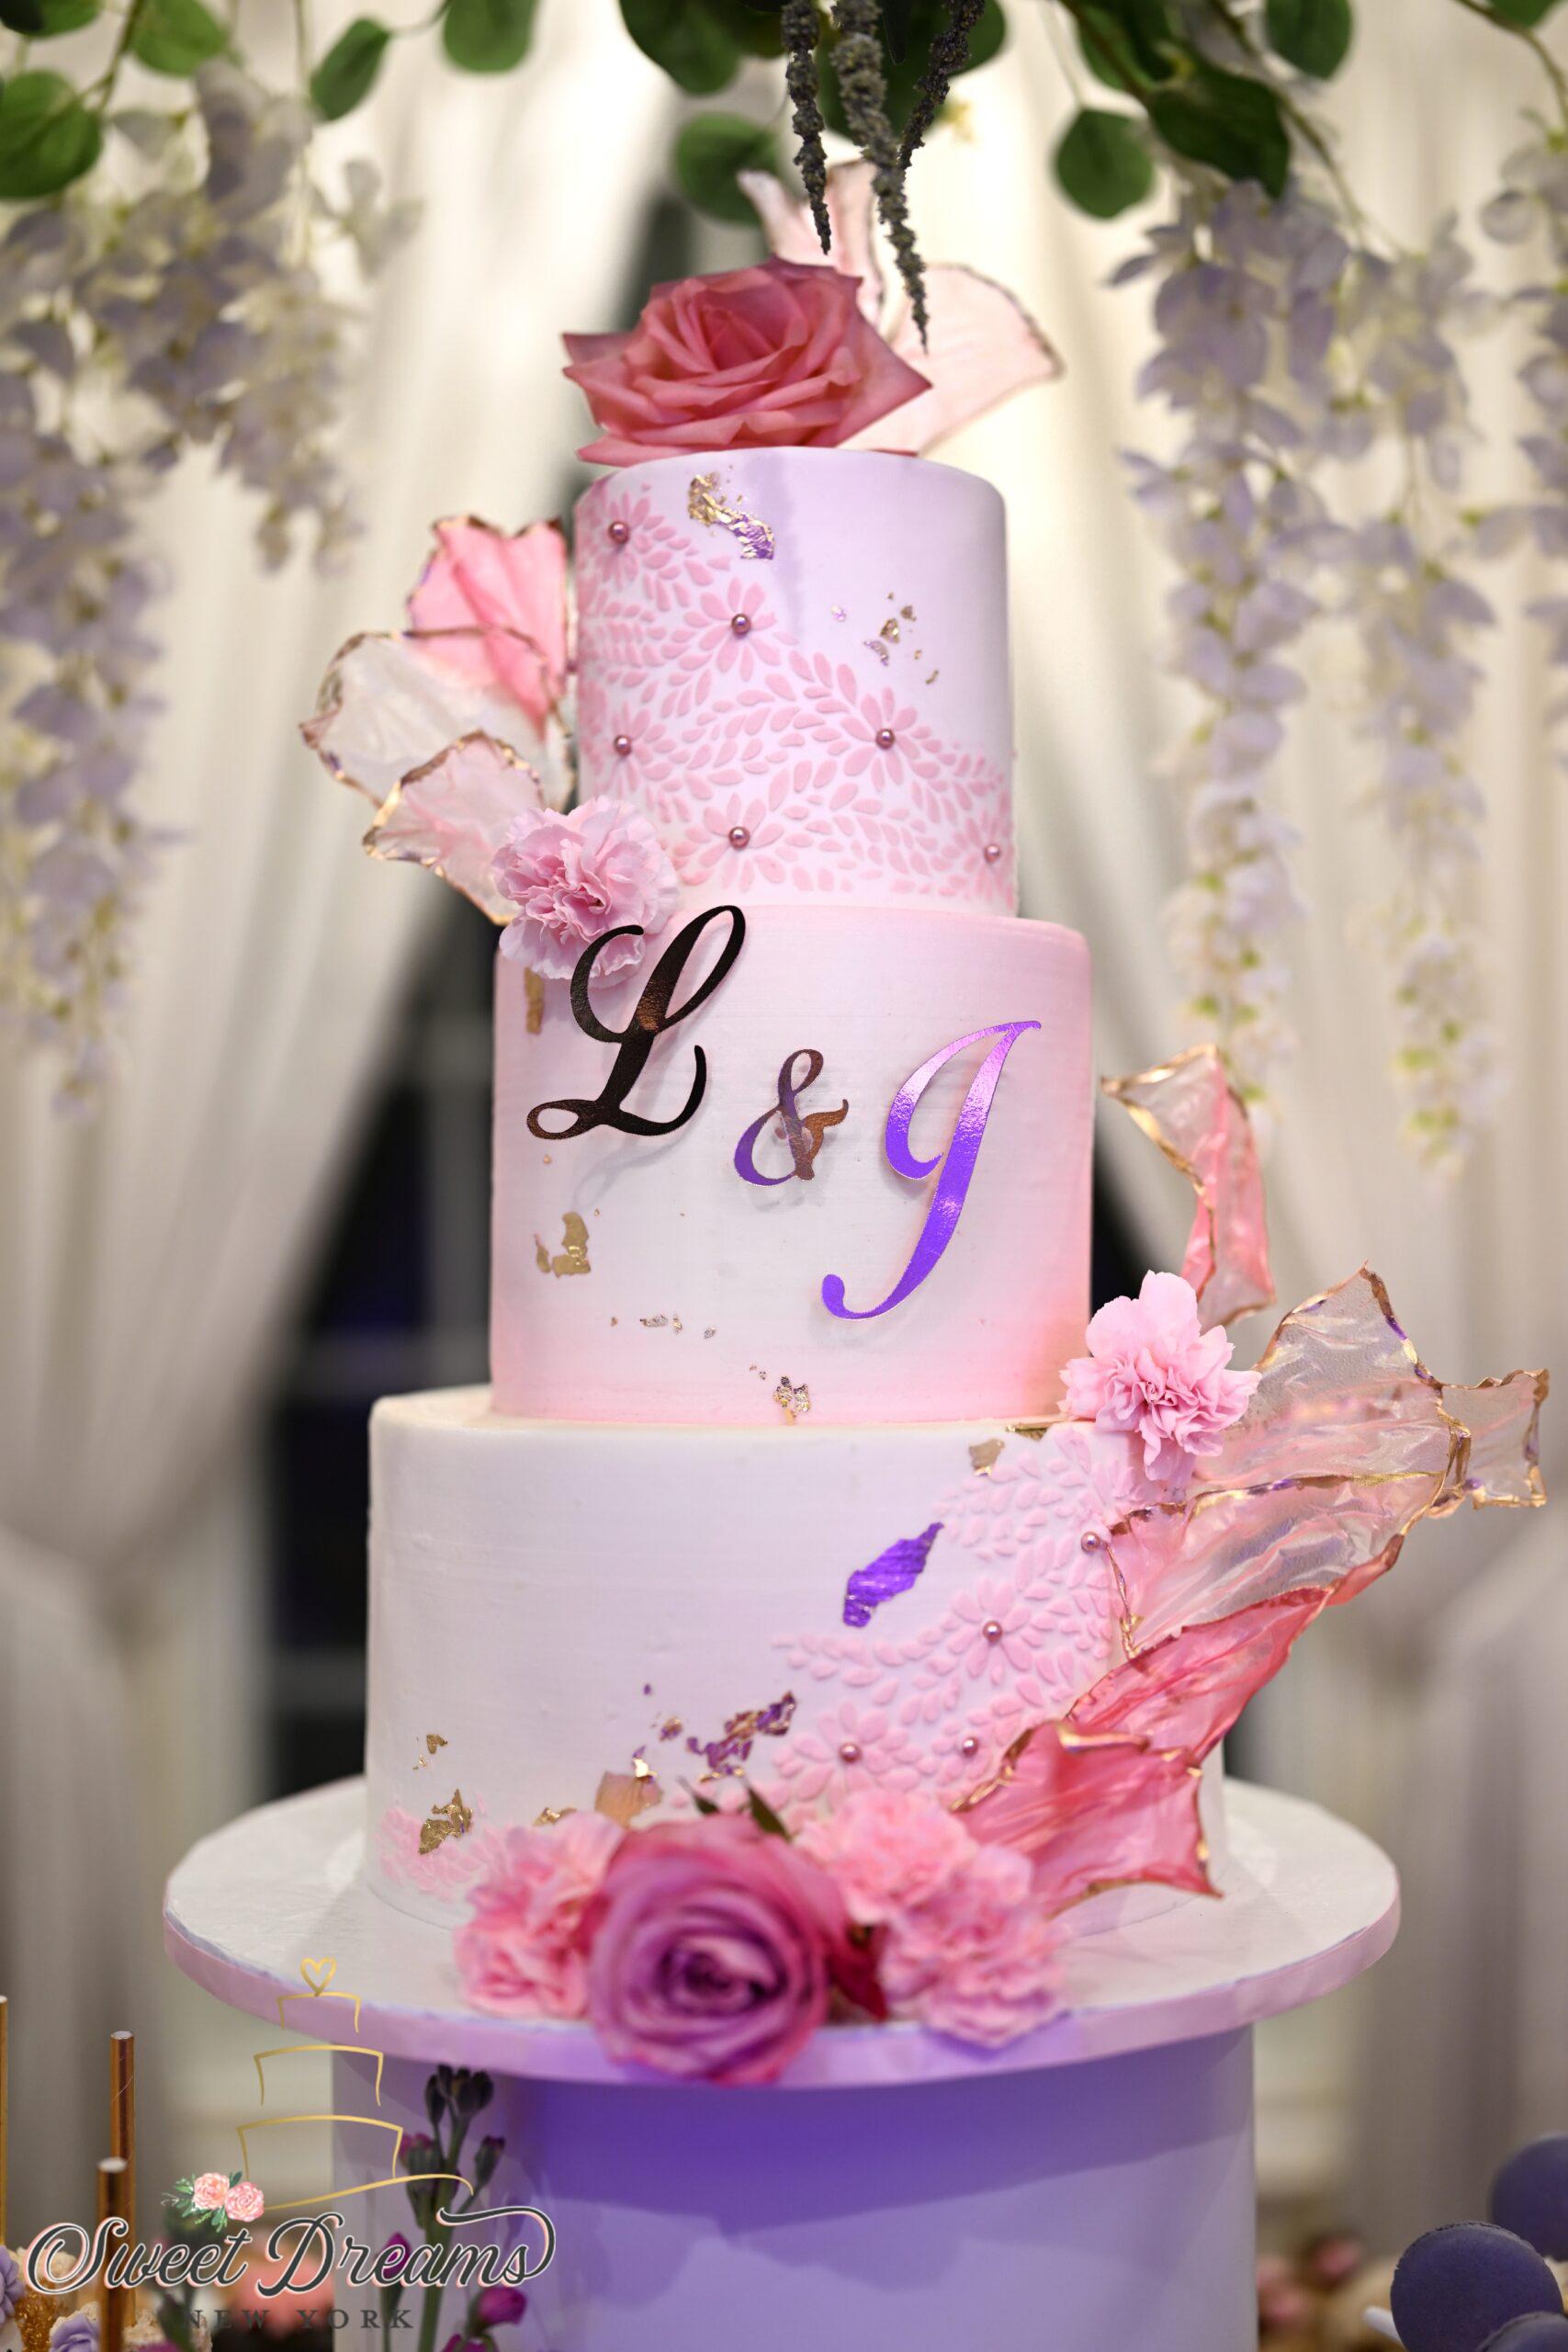 White and pink elegant wedding cake bakery Long Island Cake Artist and Designer Lori Baker